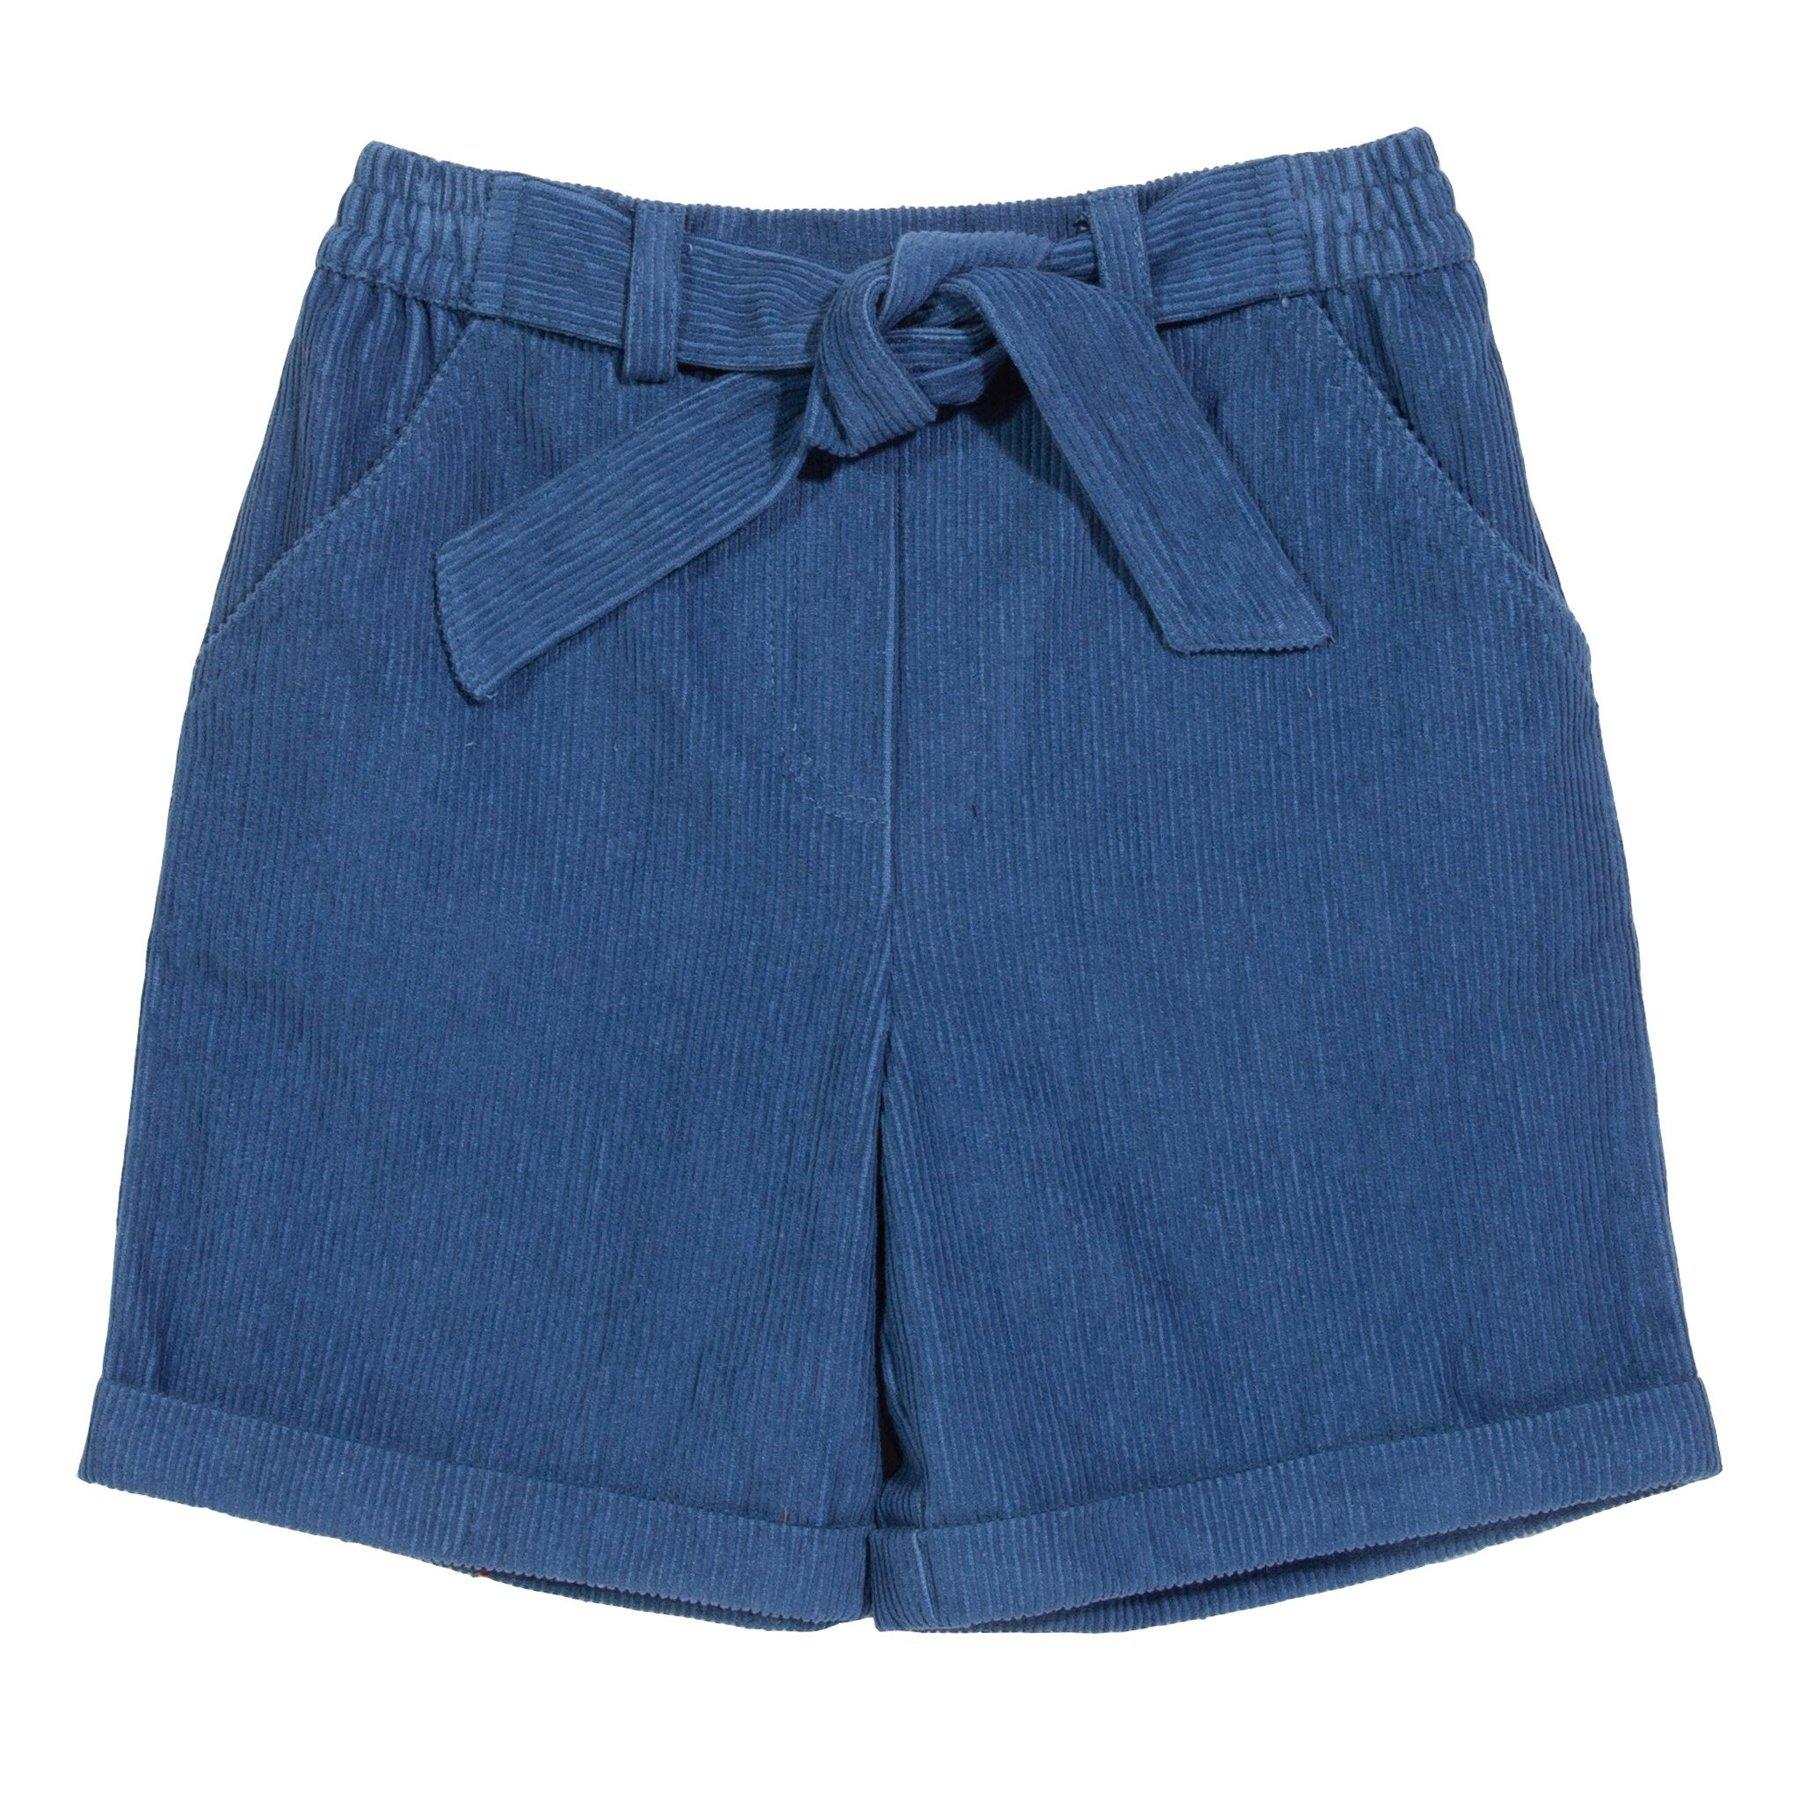 Kite Clothing Cord Shorts front